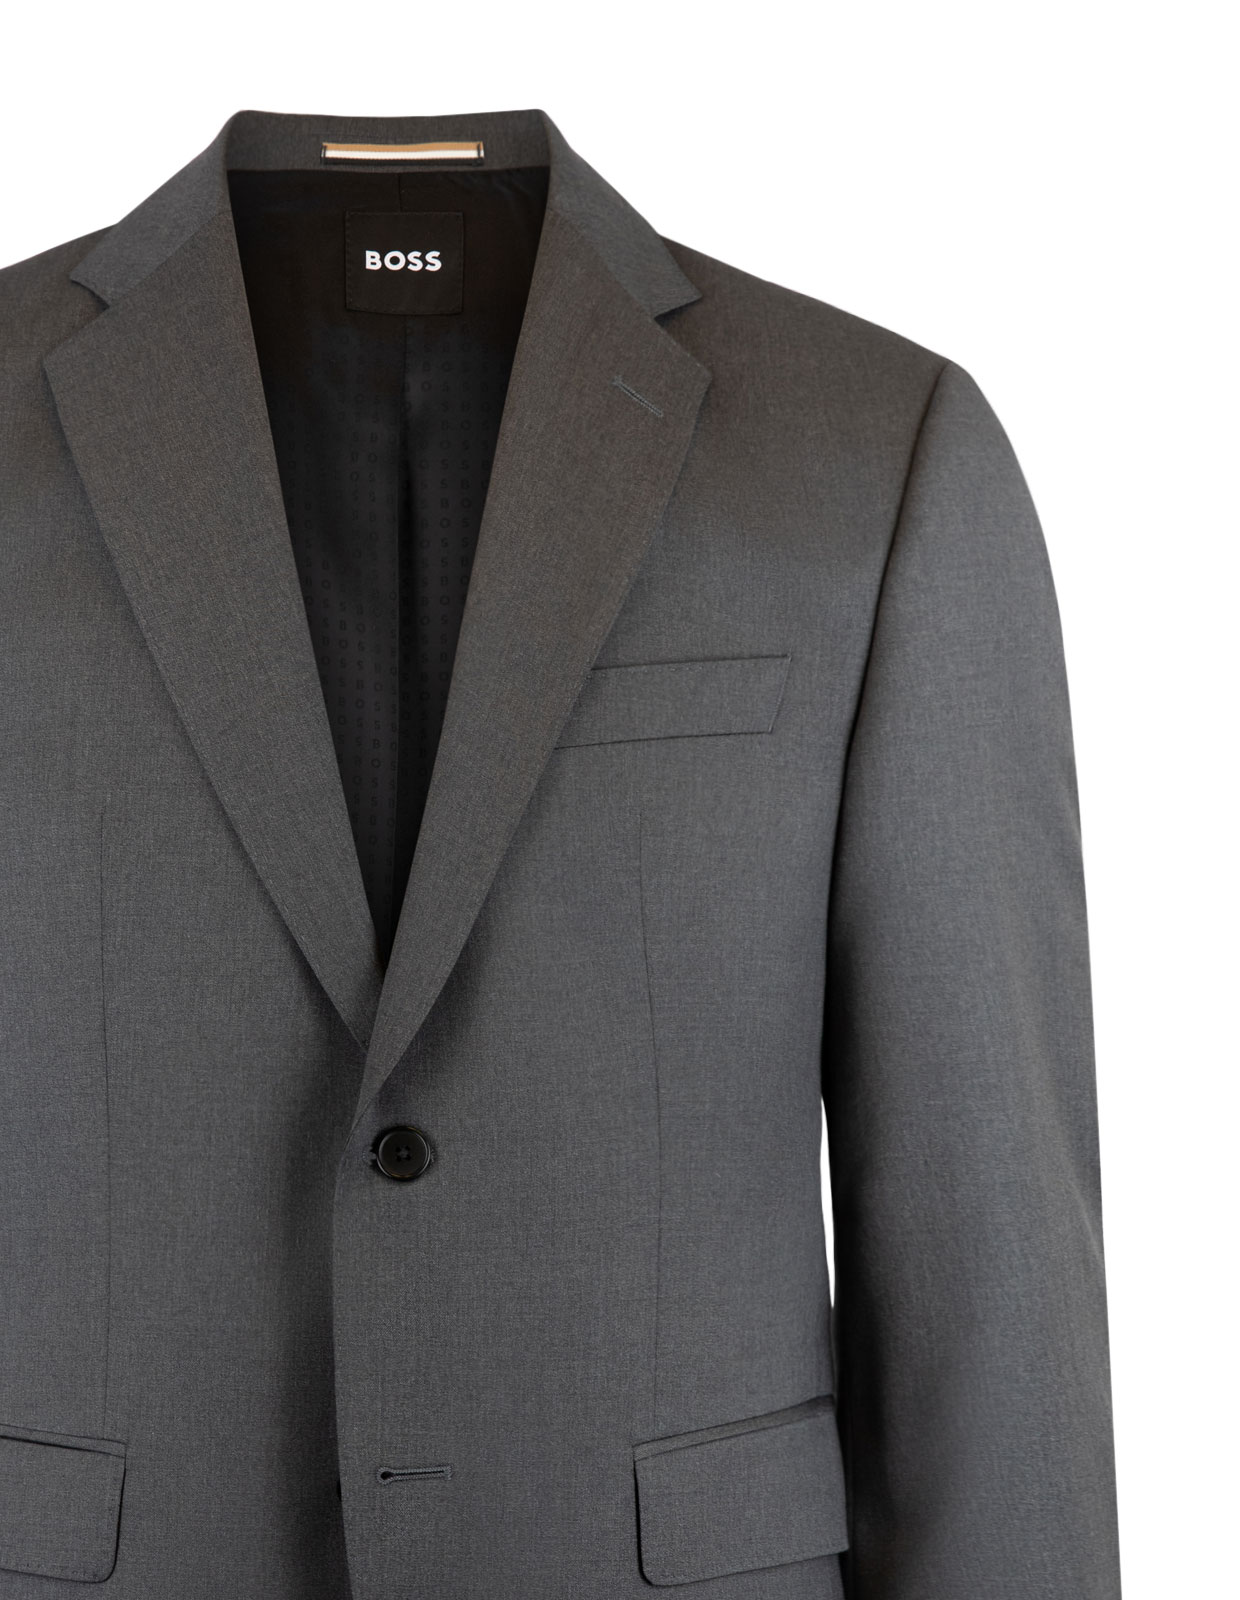 H-Jeckson Suit Jacket Regular Fit Mix & Match Grey Stl 108